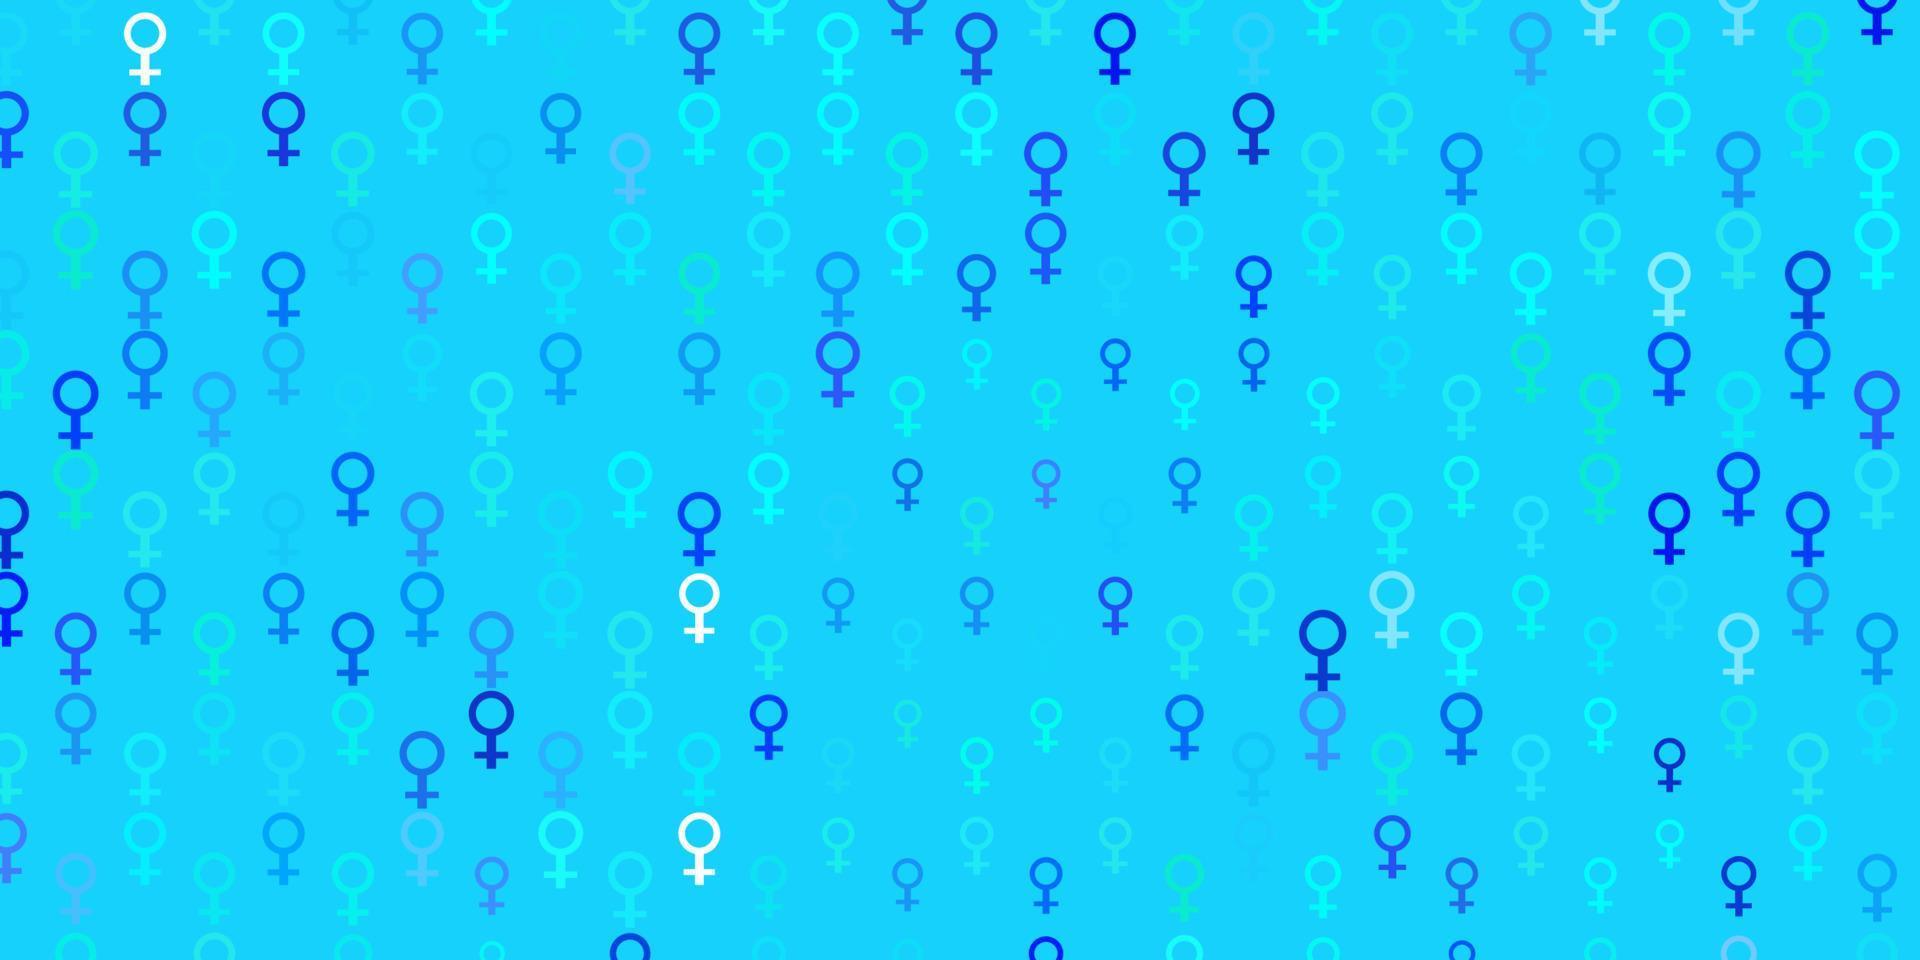 Telón de fondo de vector azul claro con símbolos de poder de las mujeres.